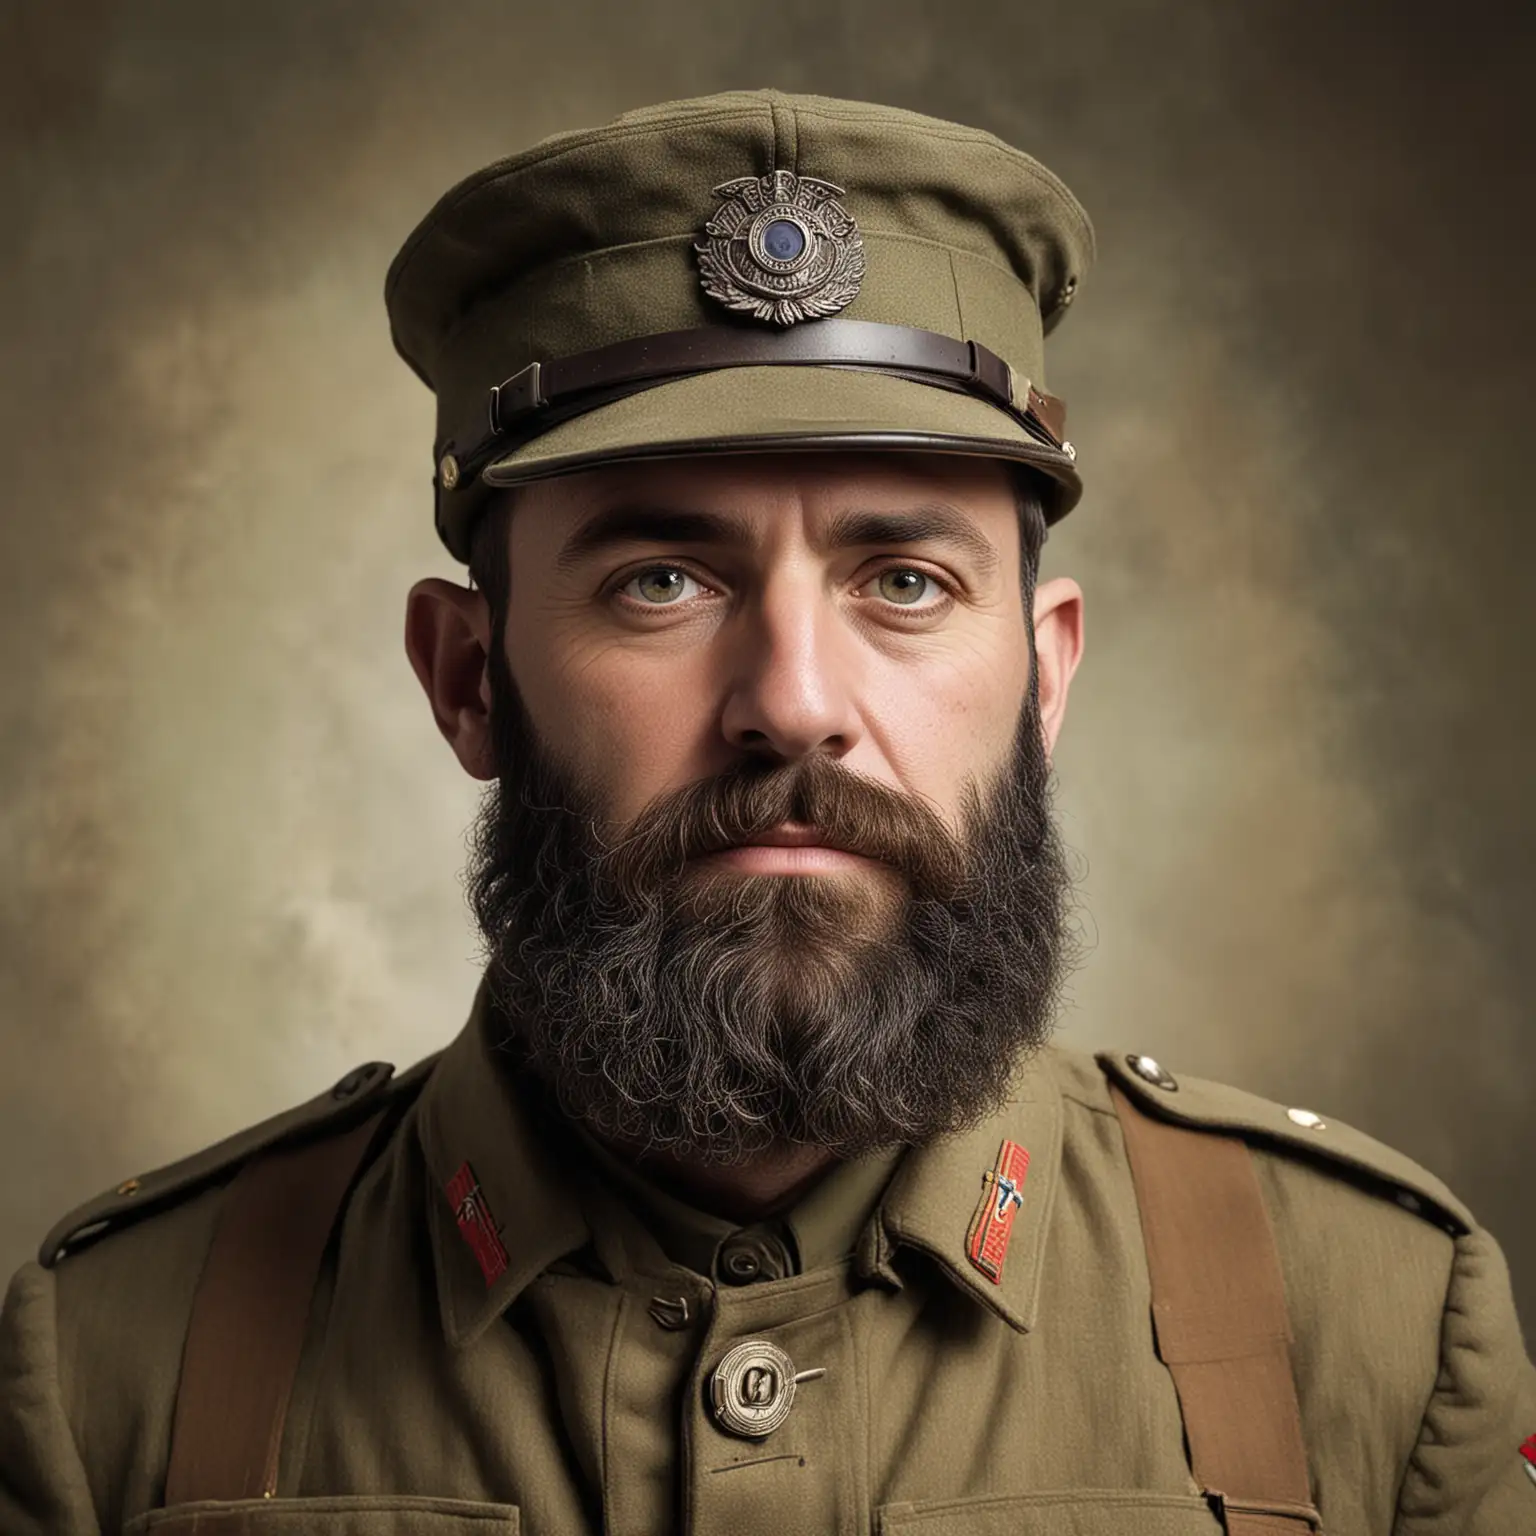 A 40 year old world war one veteran with a short dark beard and one eye